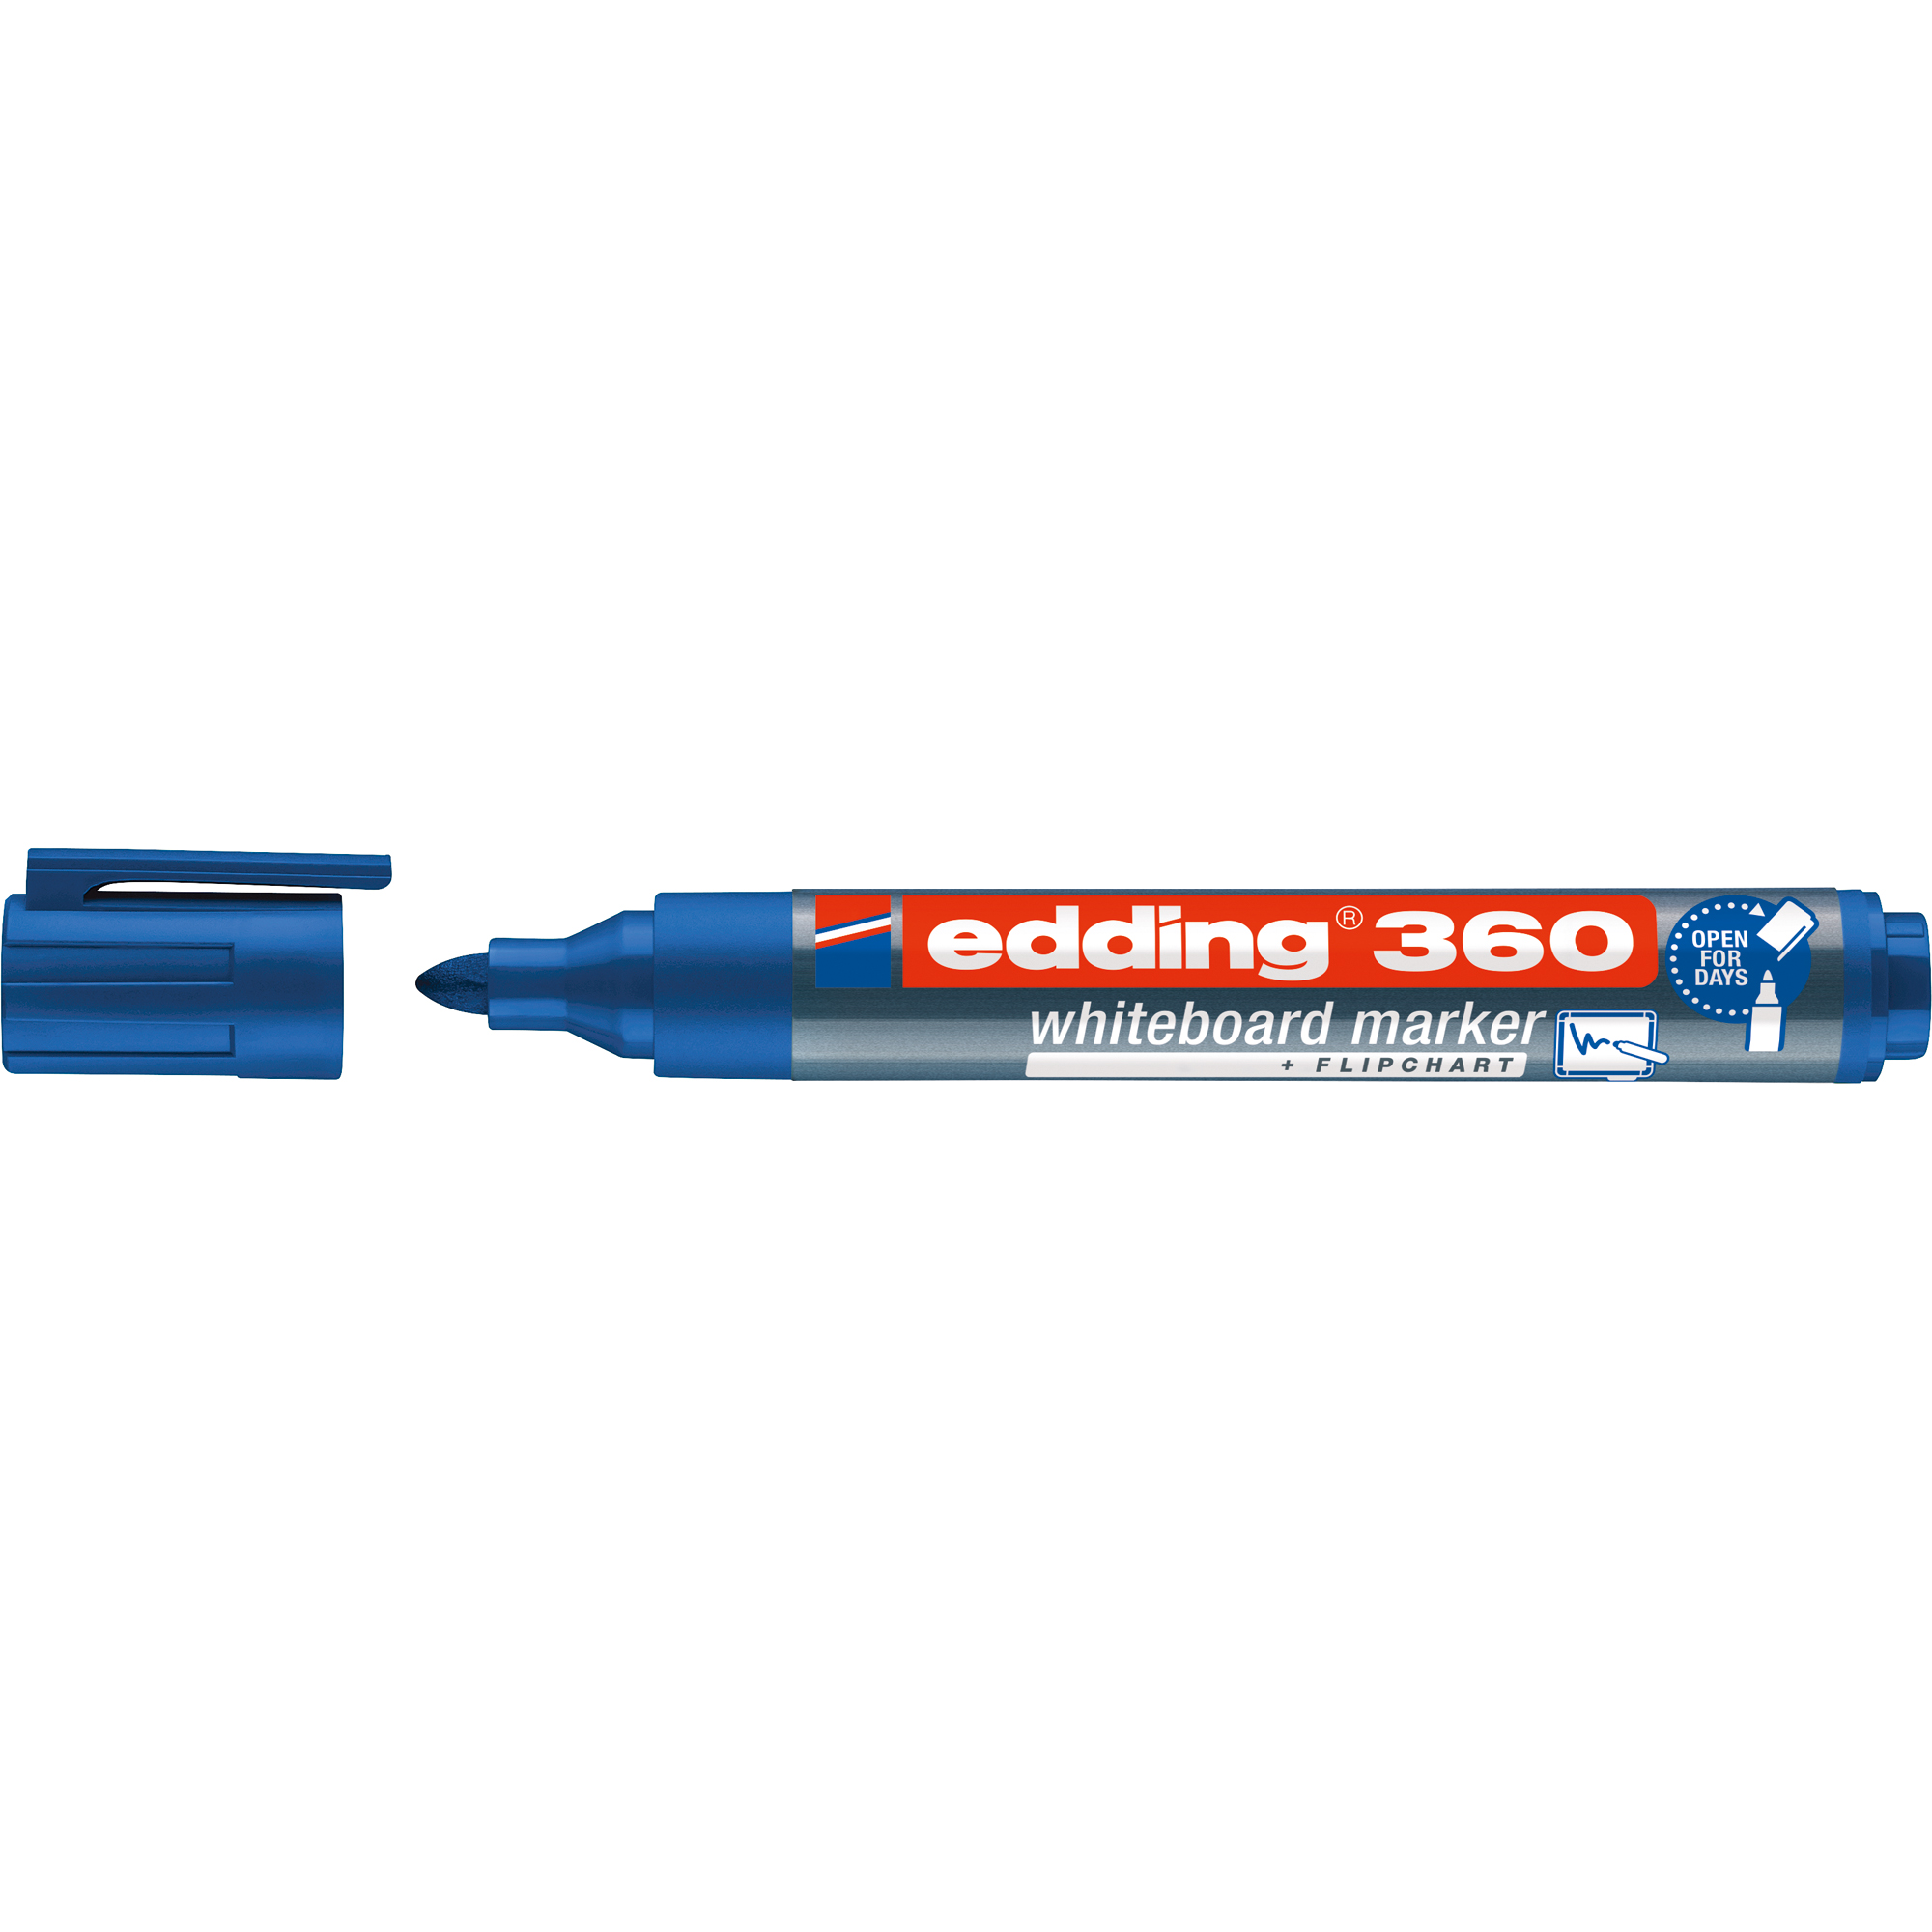 Rundspitze EDDING Whiteboardmarker, 360 nachfüllbar blau Boardmarker 1,5-3mm